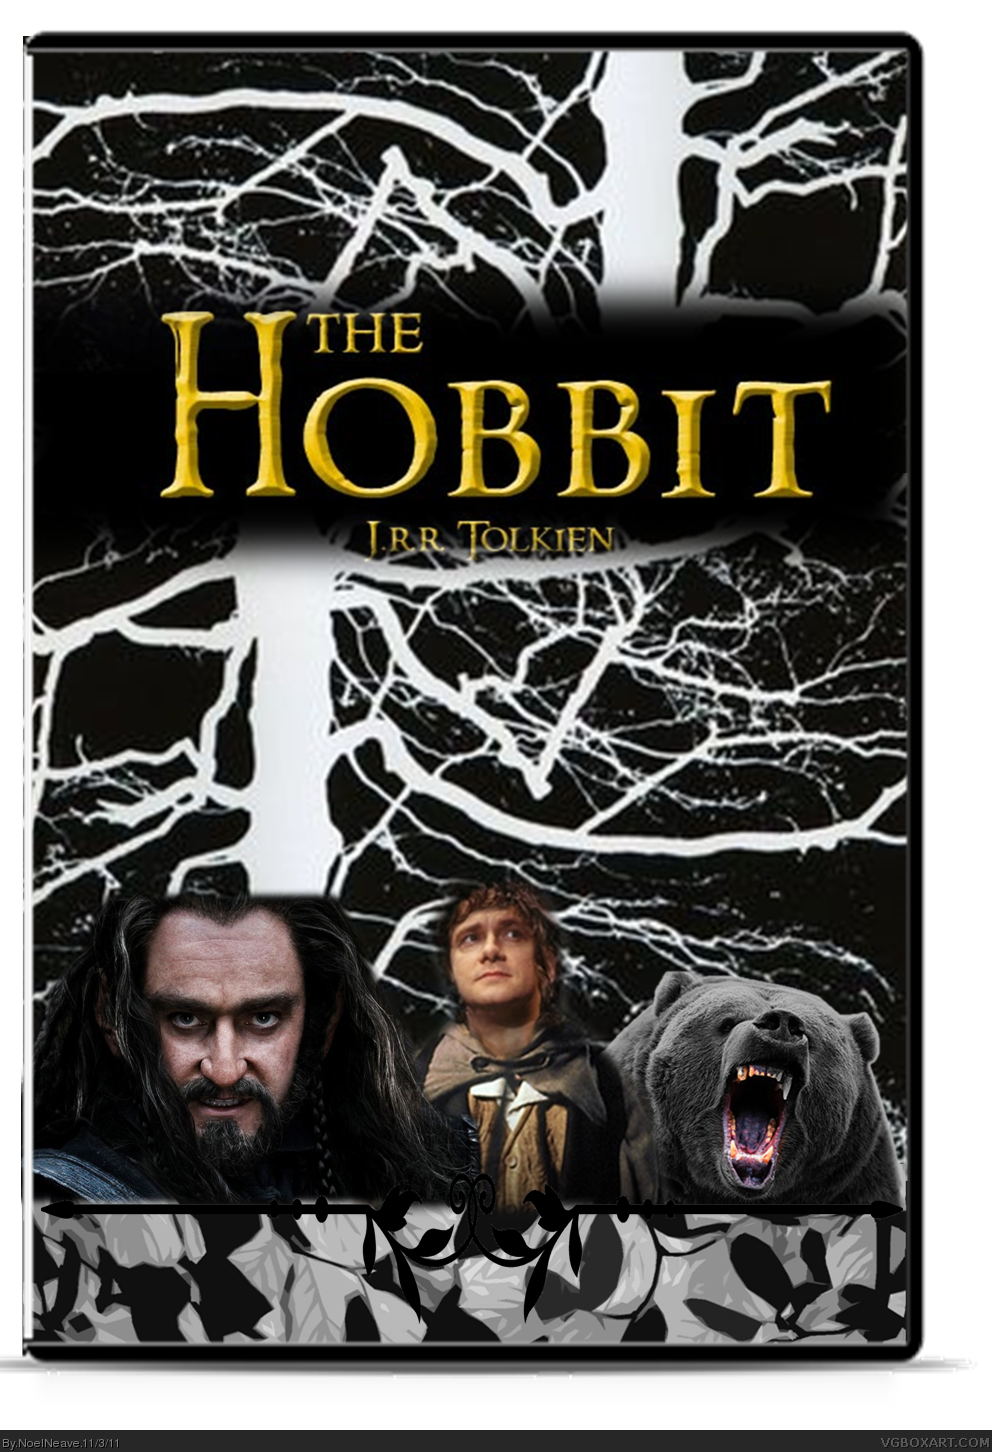 The Hobbit box cover